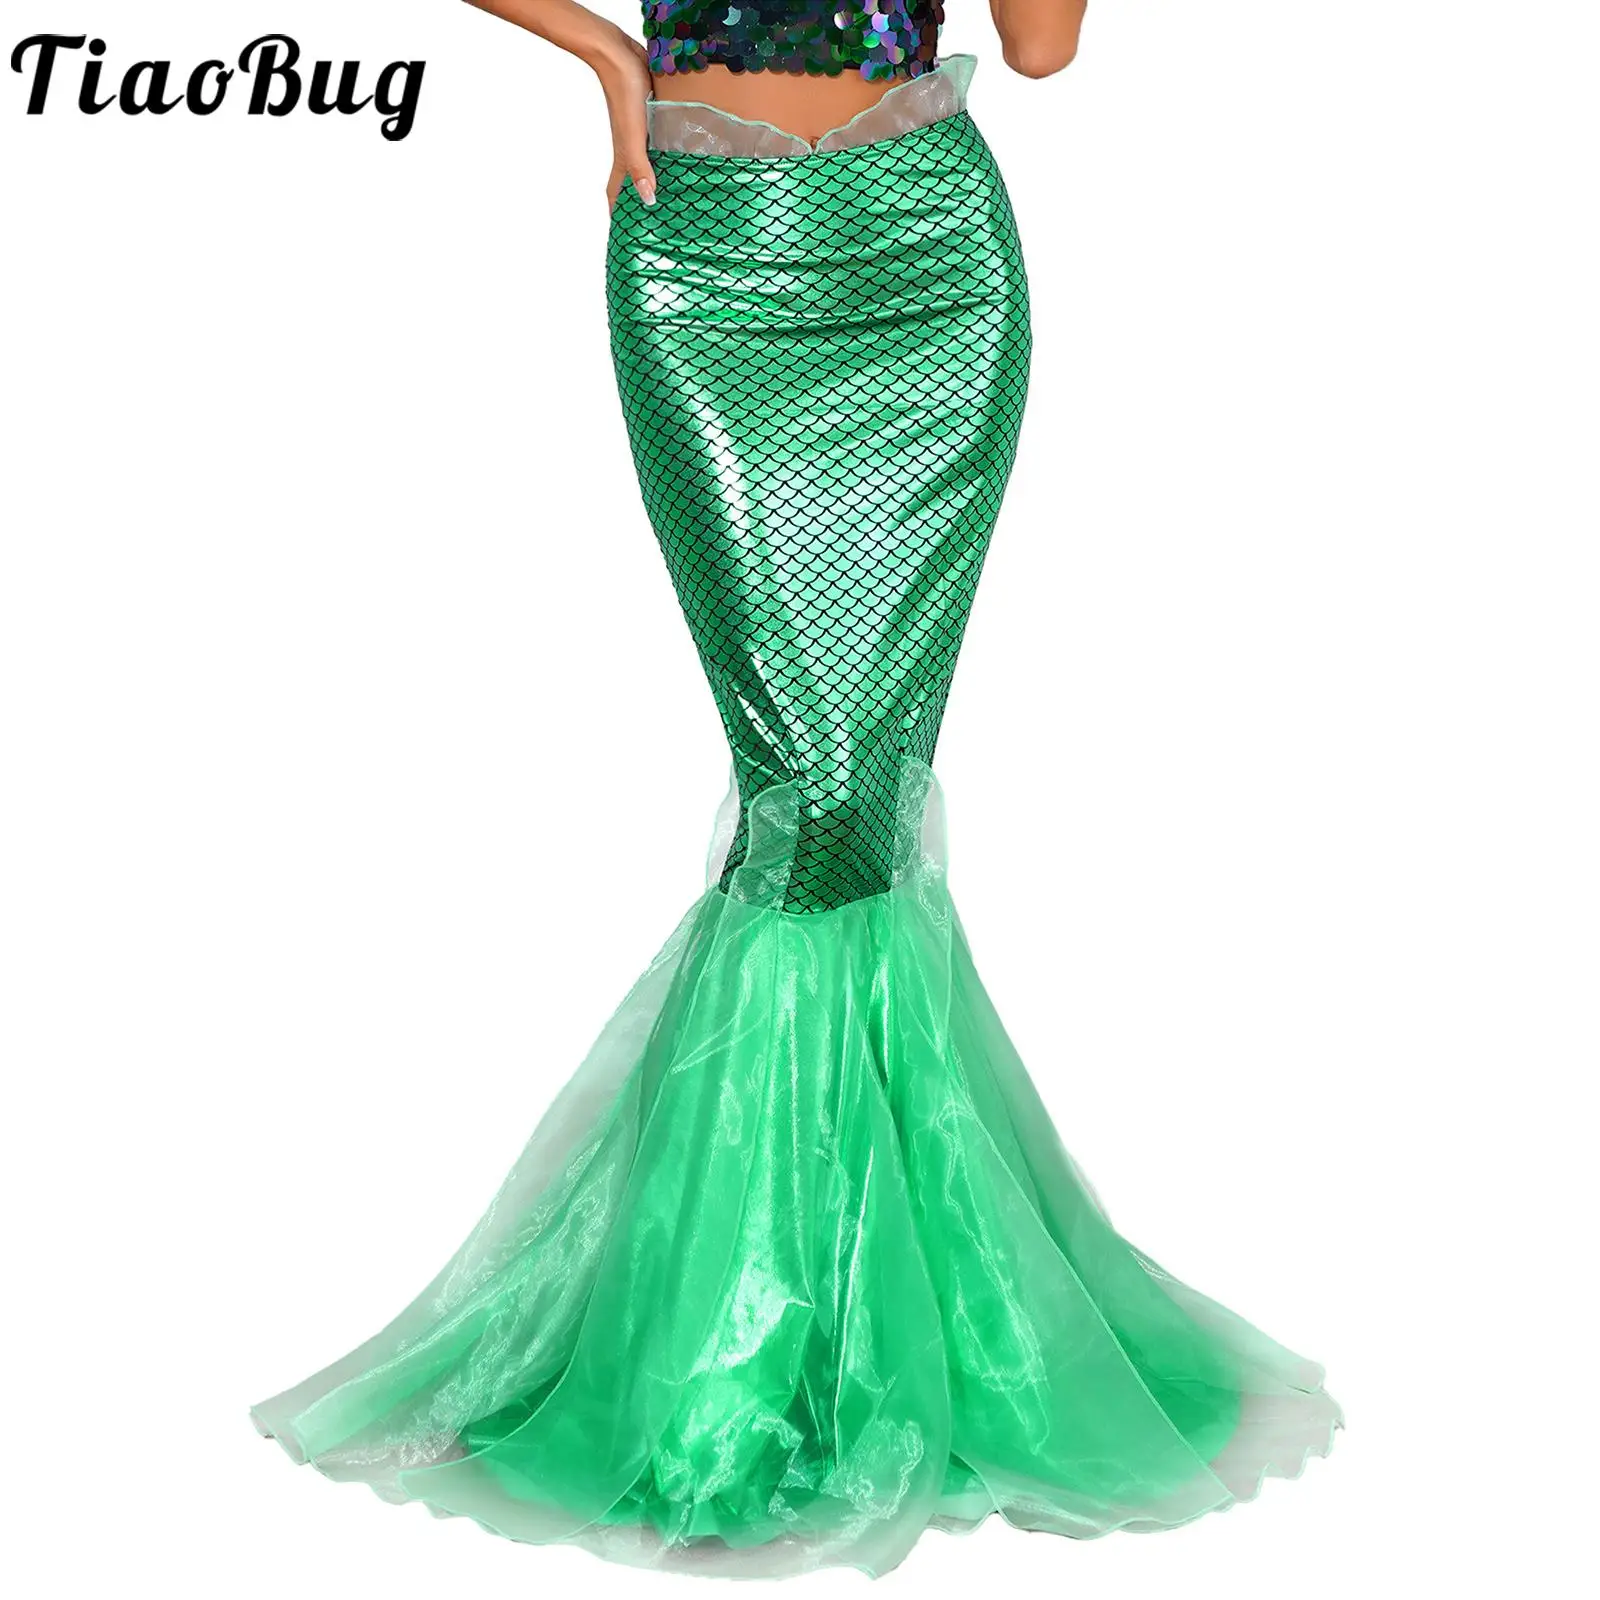 

Women Mermaid Tail Costume Skirt Fish Scale Print High Waist Hip Skirt Fancy Party Metallic Fishtail Long Maxi Skirts Role Play